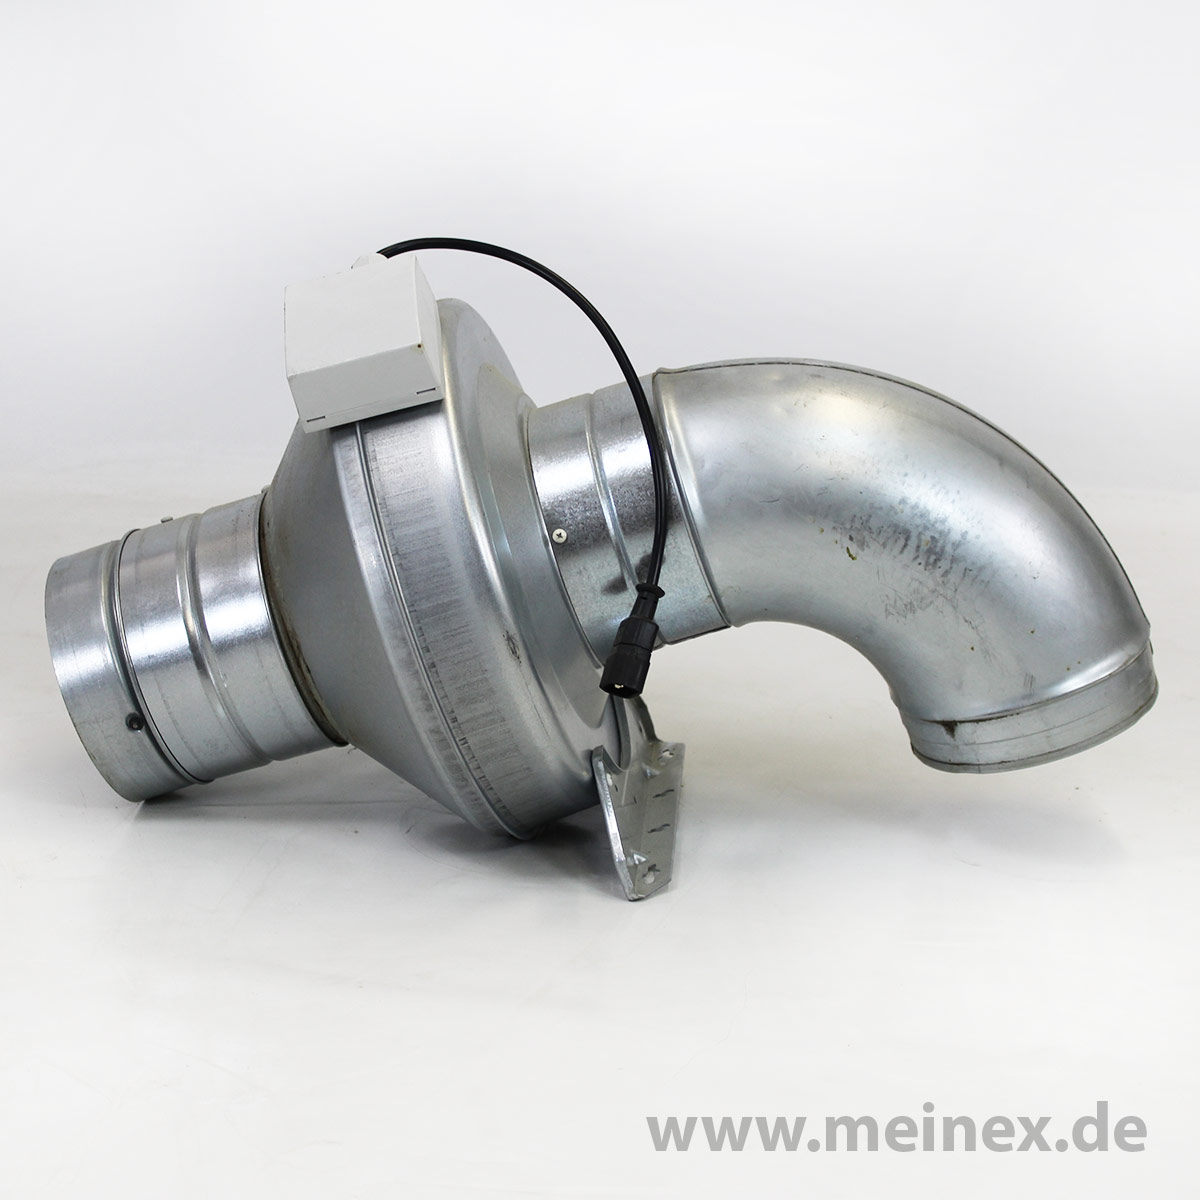 https://www.meinex.de/media/image/83/fe/30/Rohrventilator-K-160-XL-gebraucht.jpg